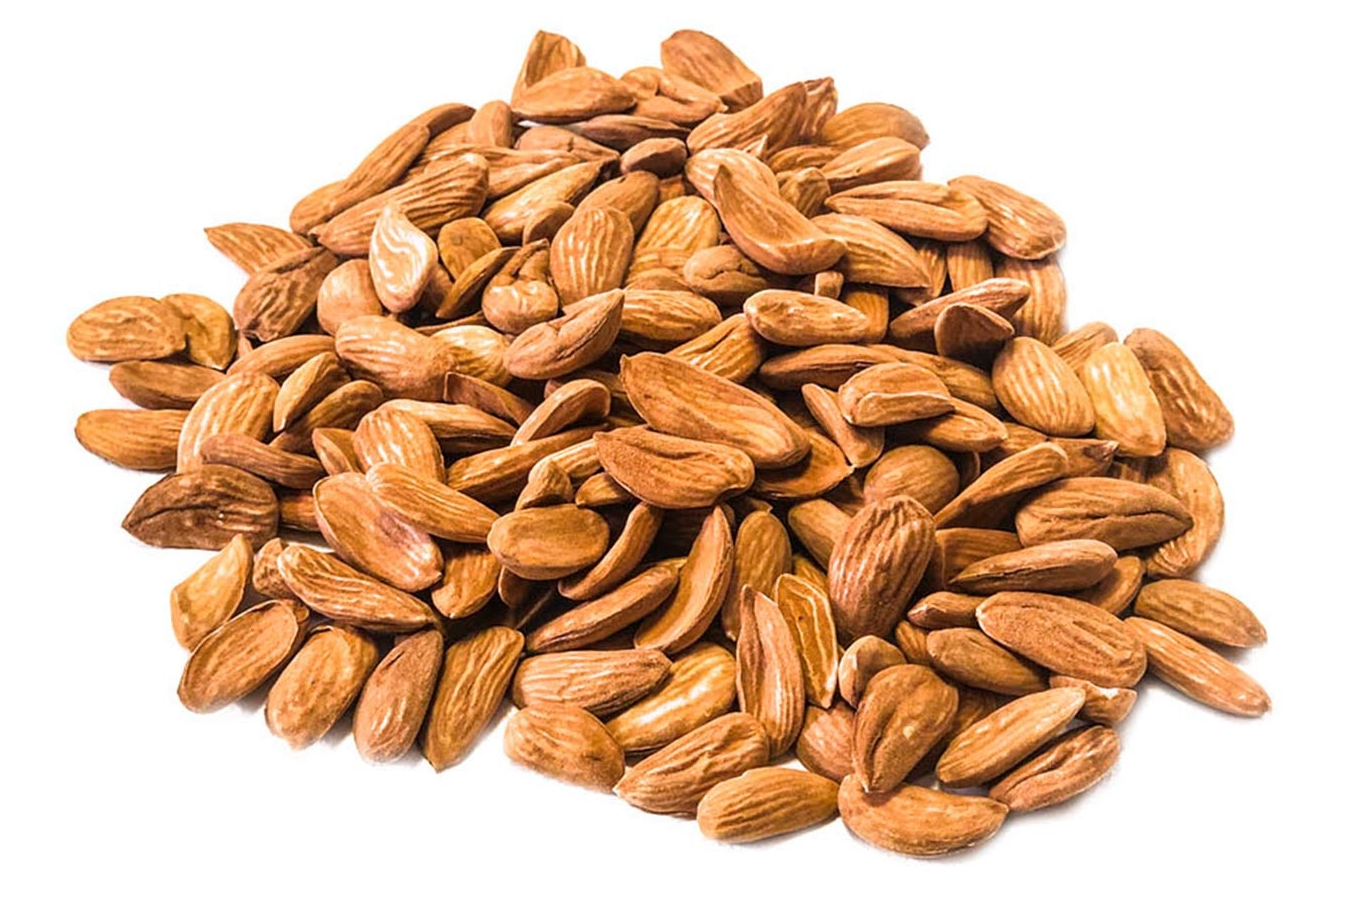 Properties and Benefits of Mamra almonds